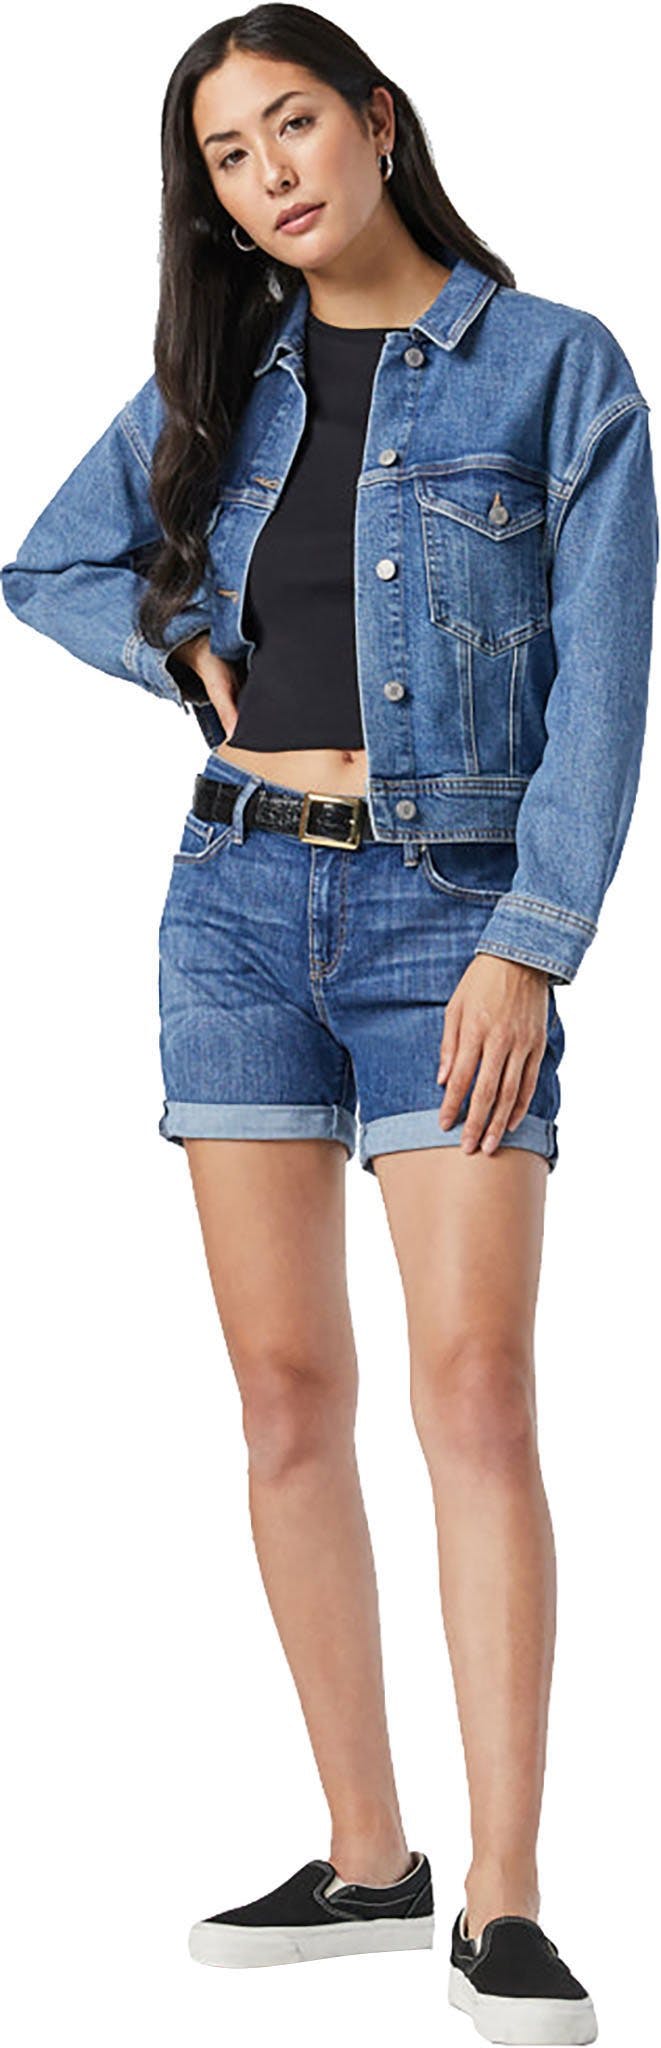 Product image for Pixie Denim Boyfriend Shorts - Women's